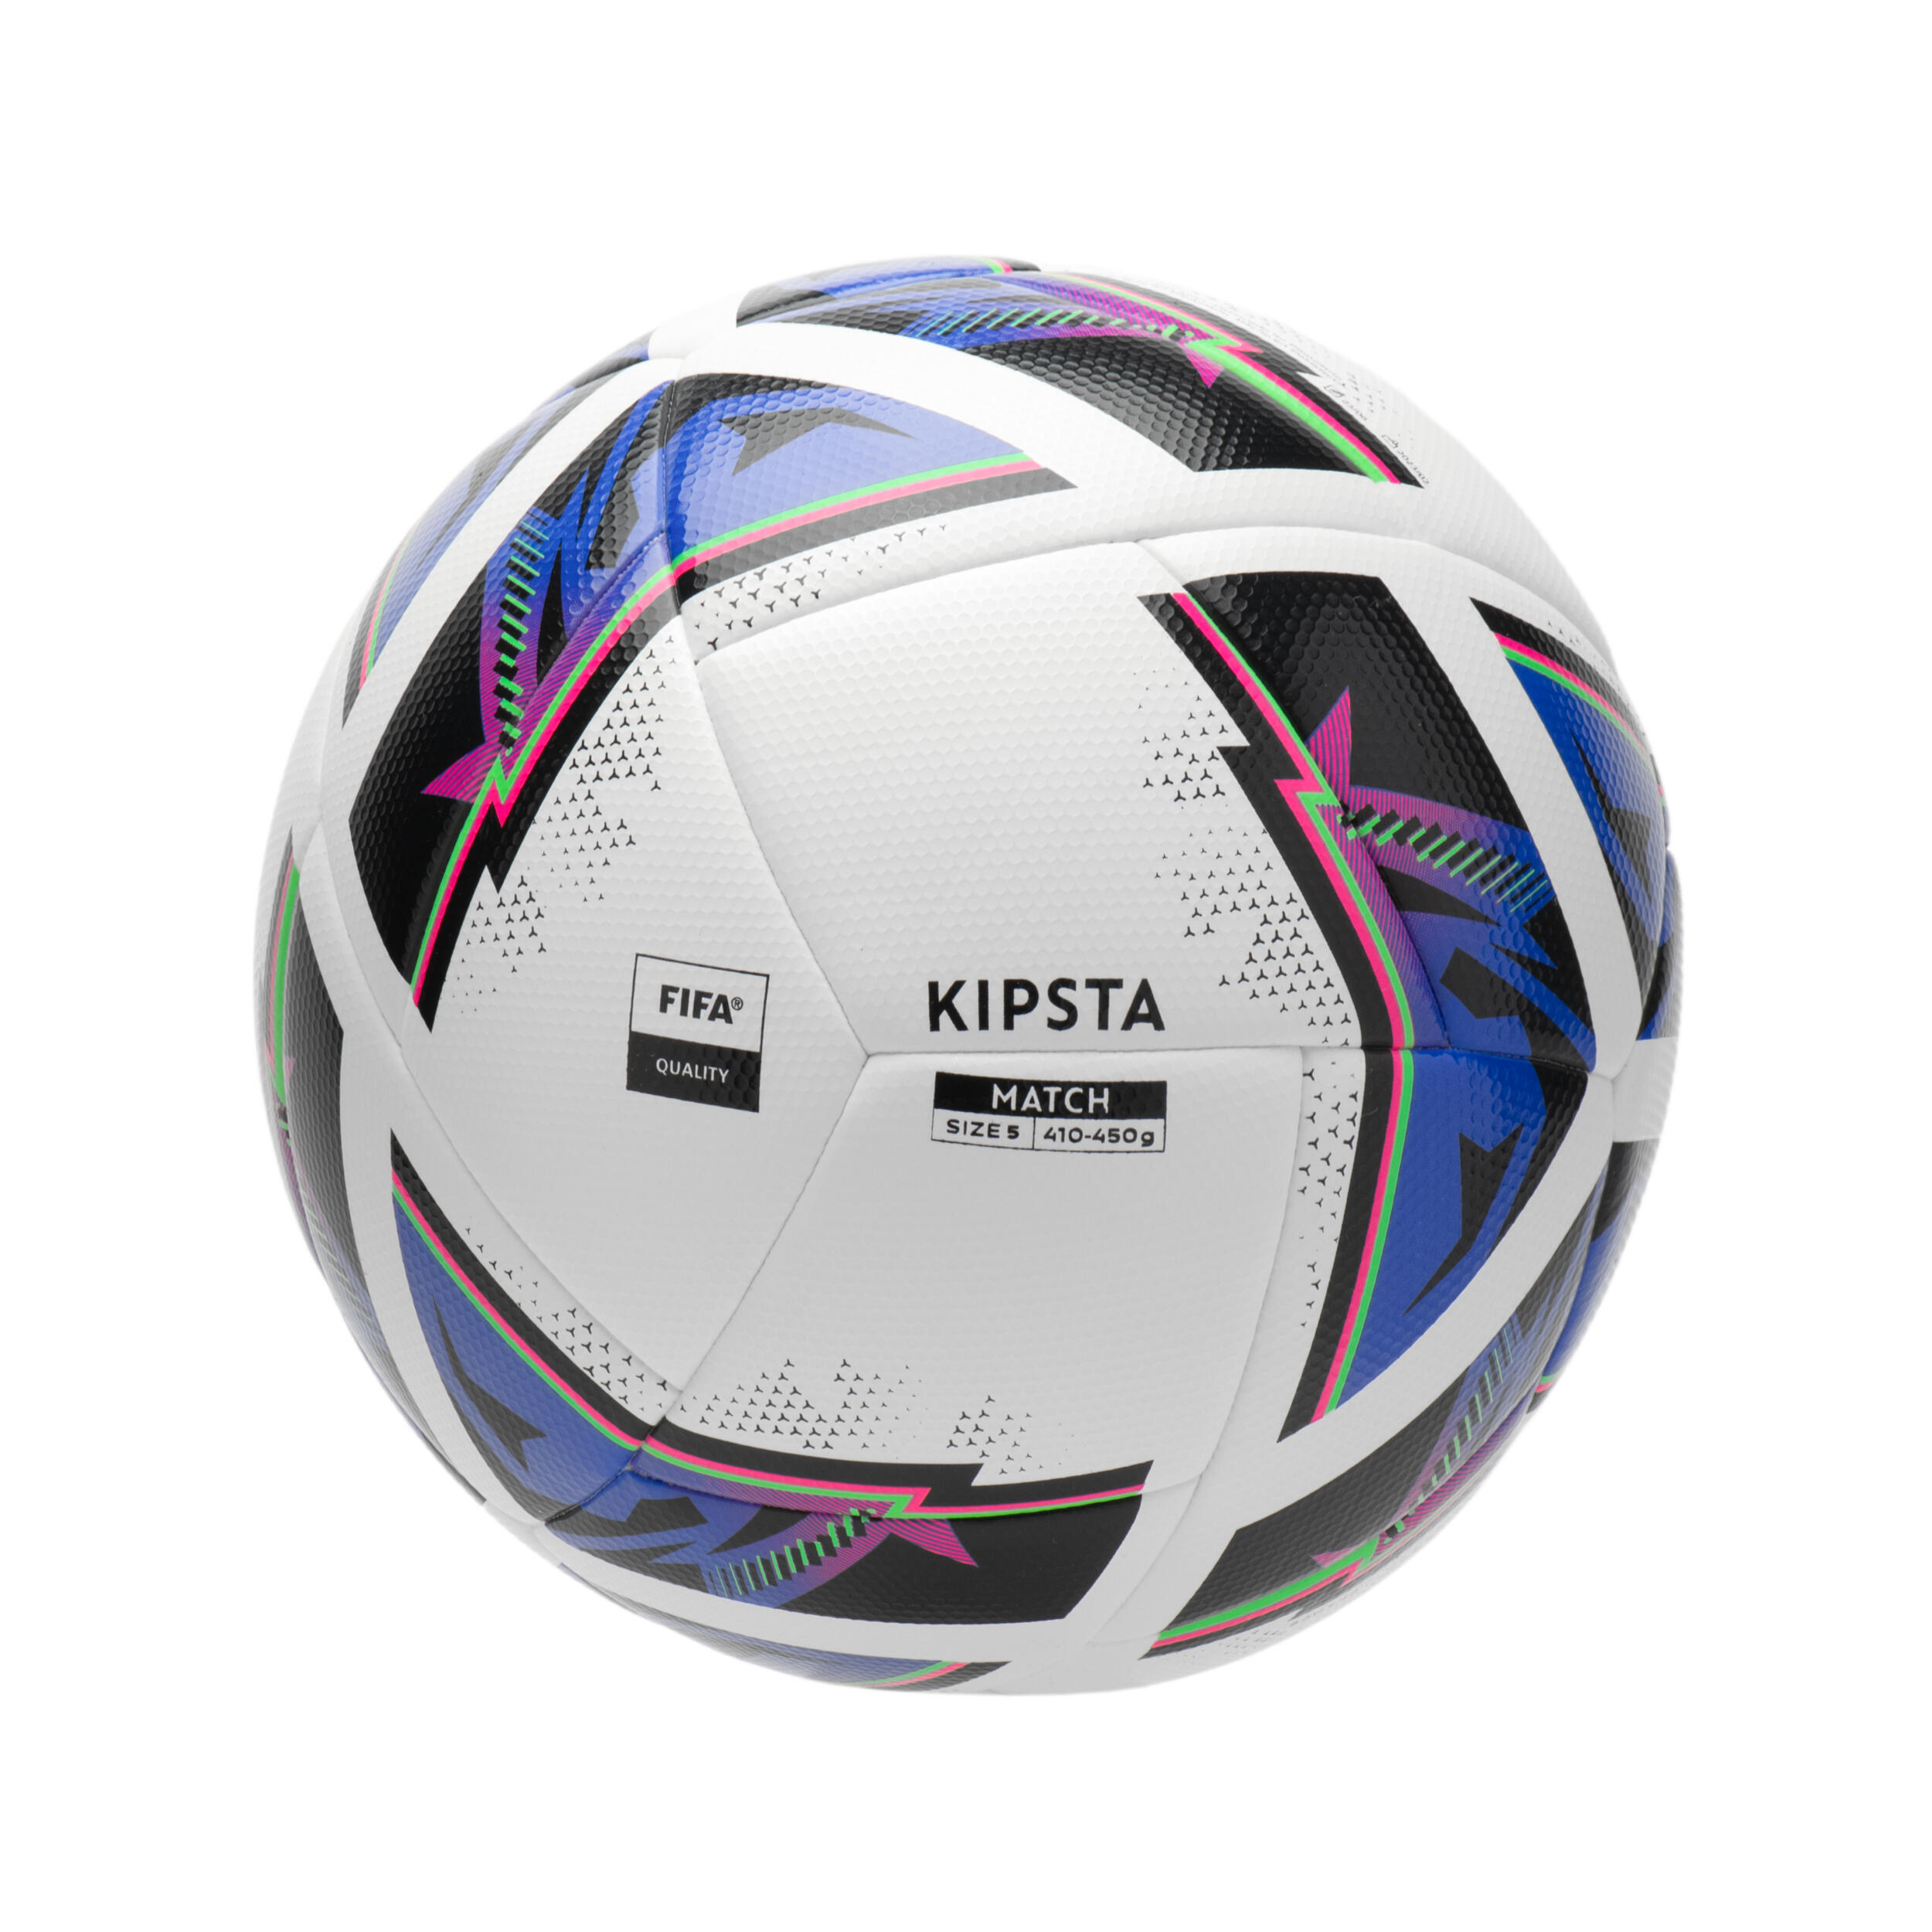 KIPSTA Size 5 FIFA Quality Football Hybrid 2 Match Ball - White